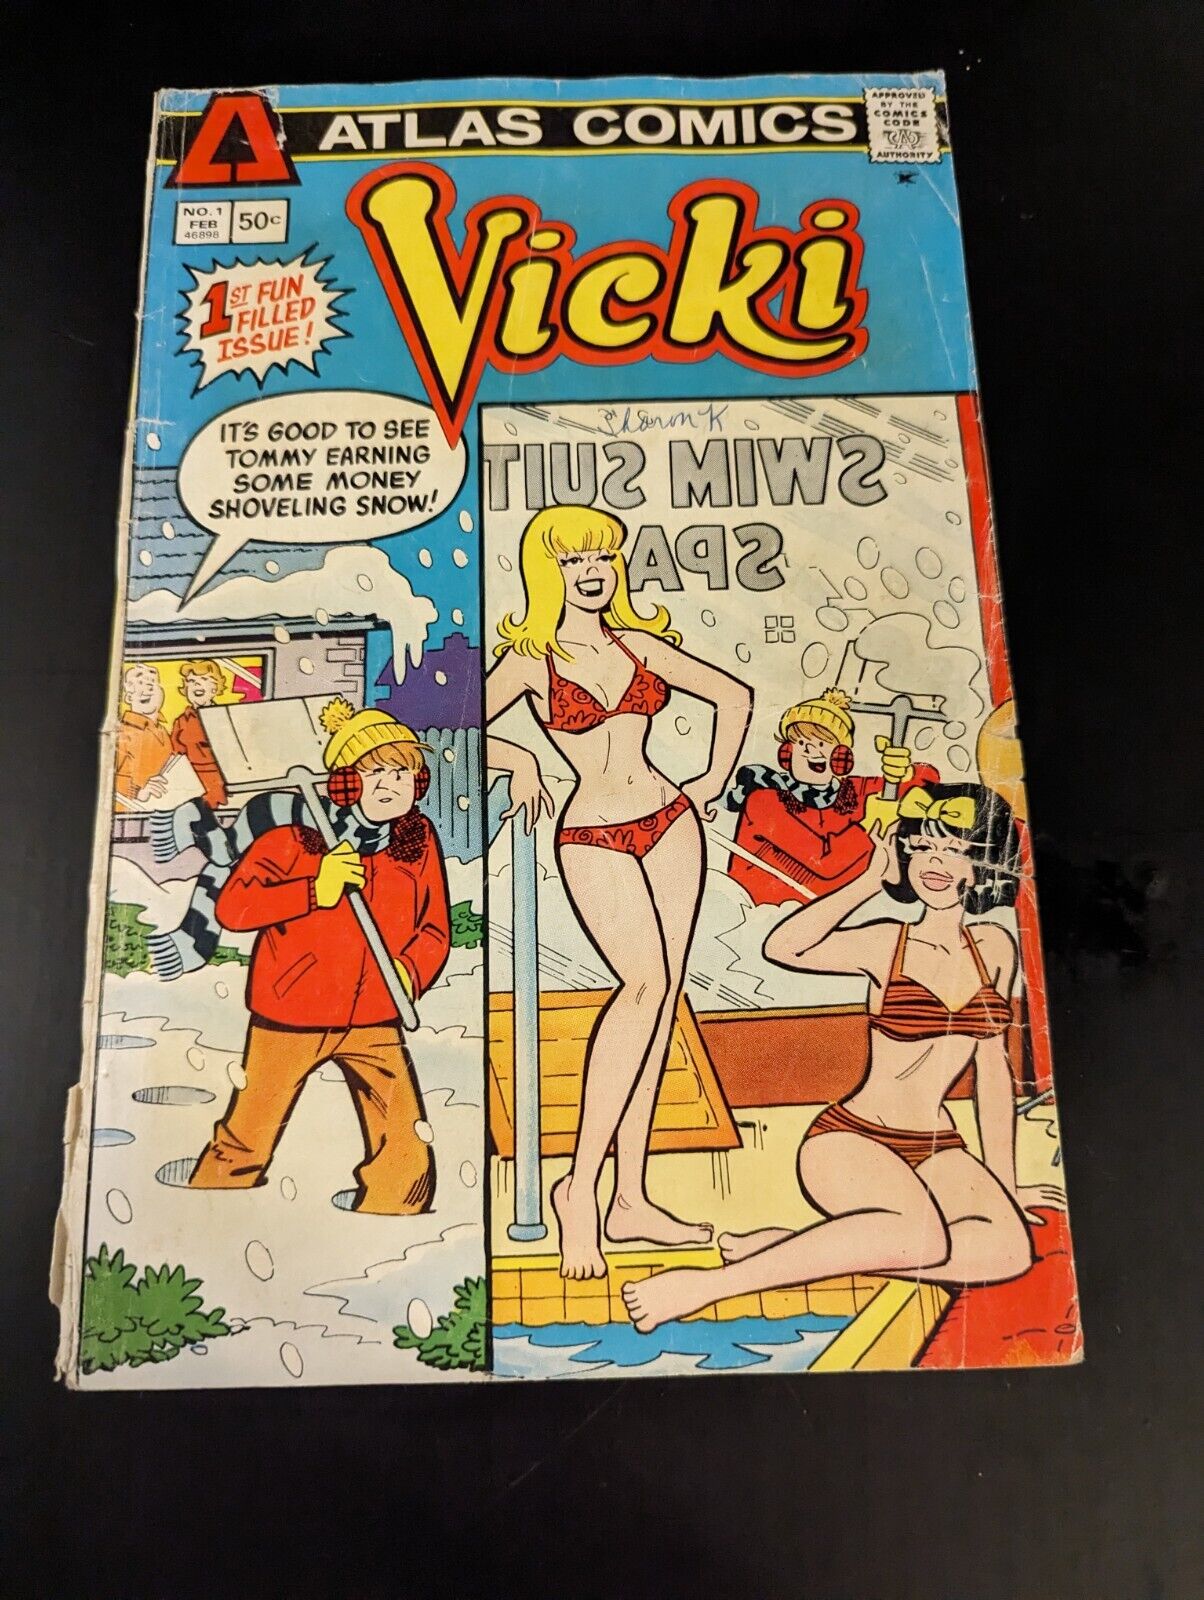 Vicki #1 (1975) Atlas/Seaboard Bronze Age Teen Humor Stan Goldberg Cover G